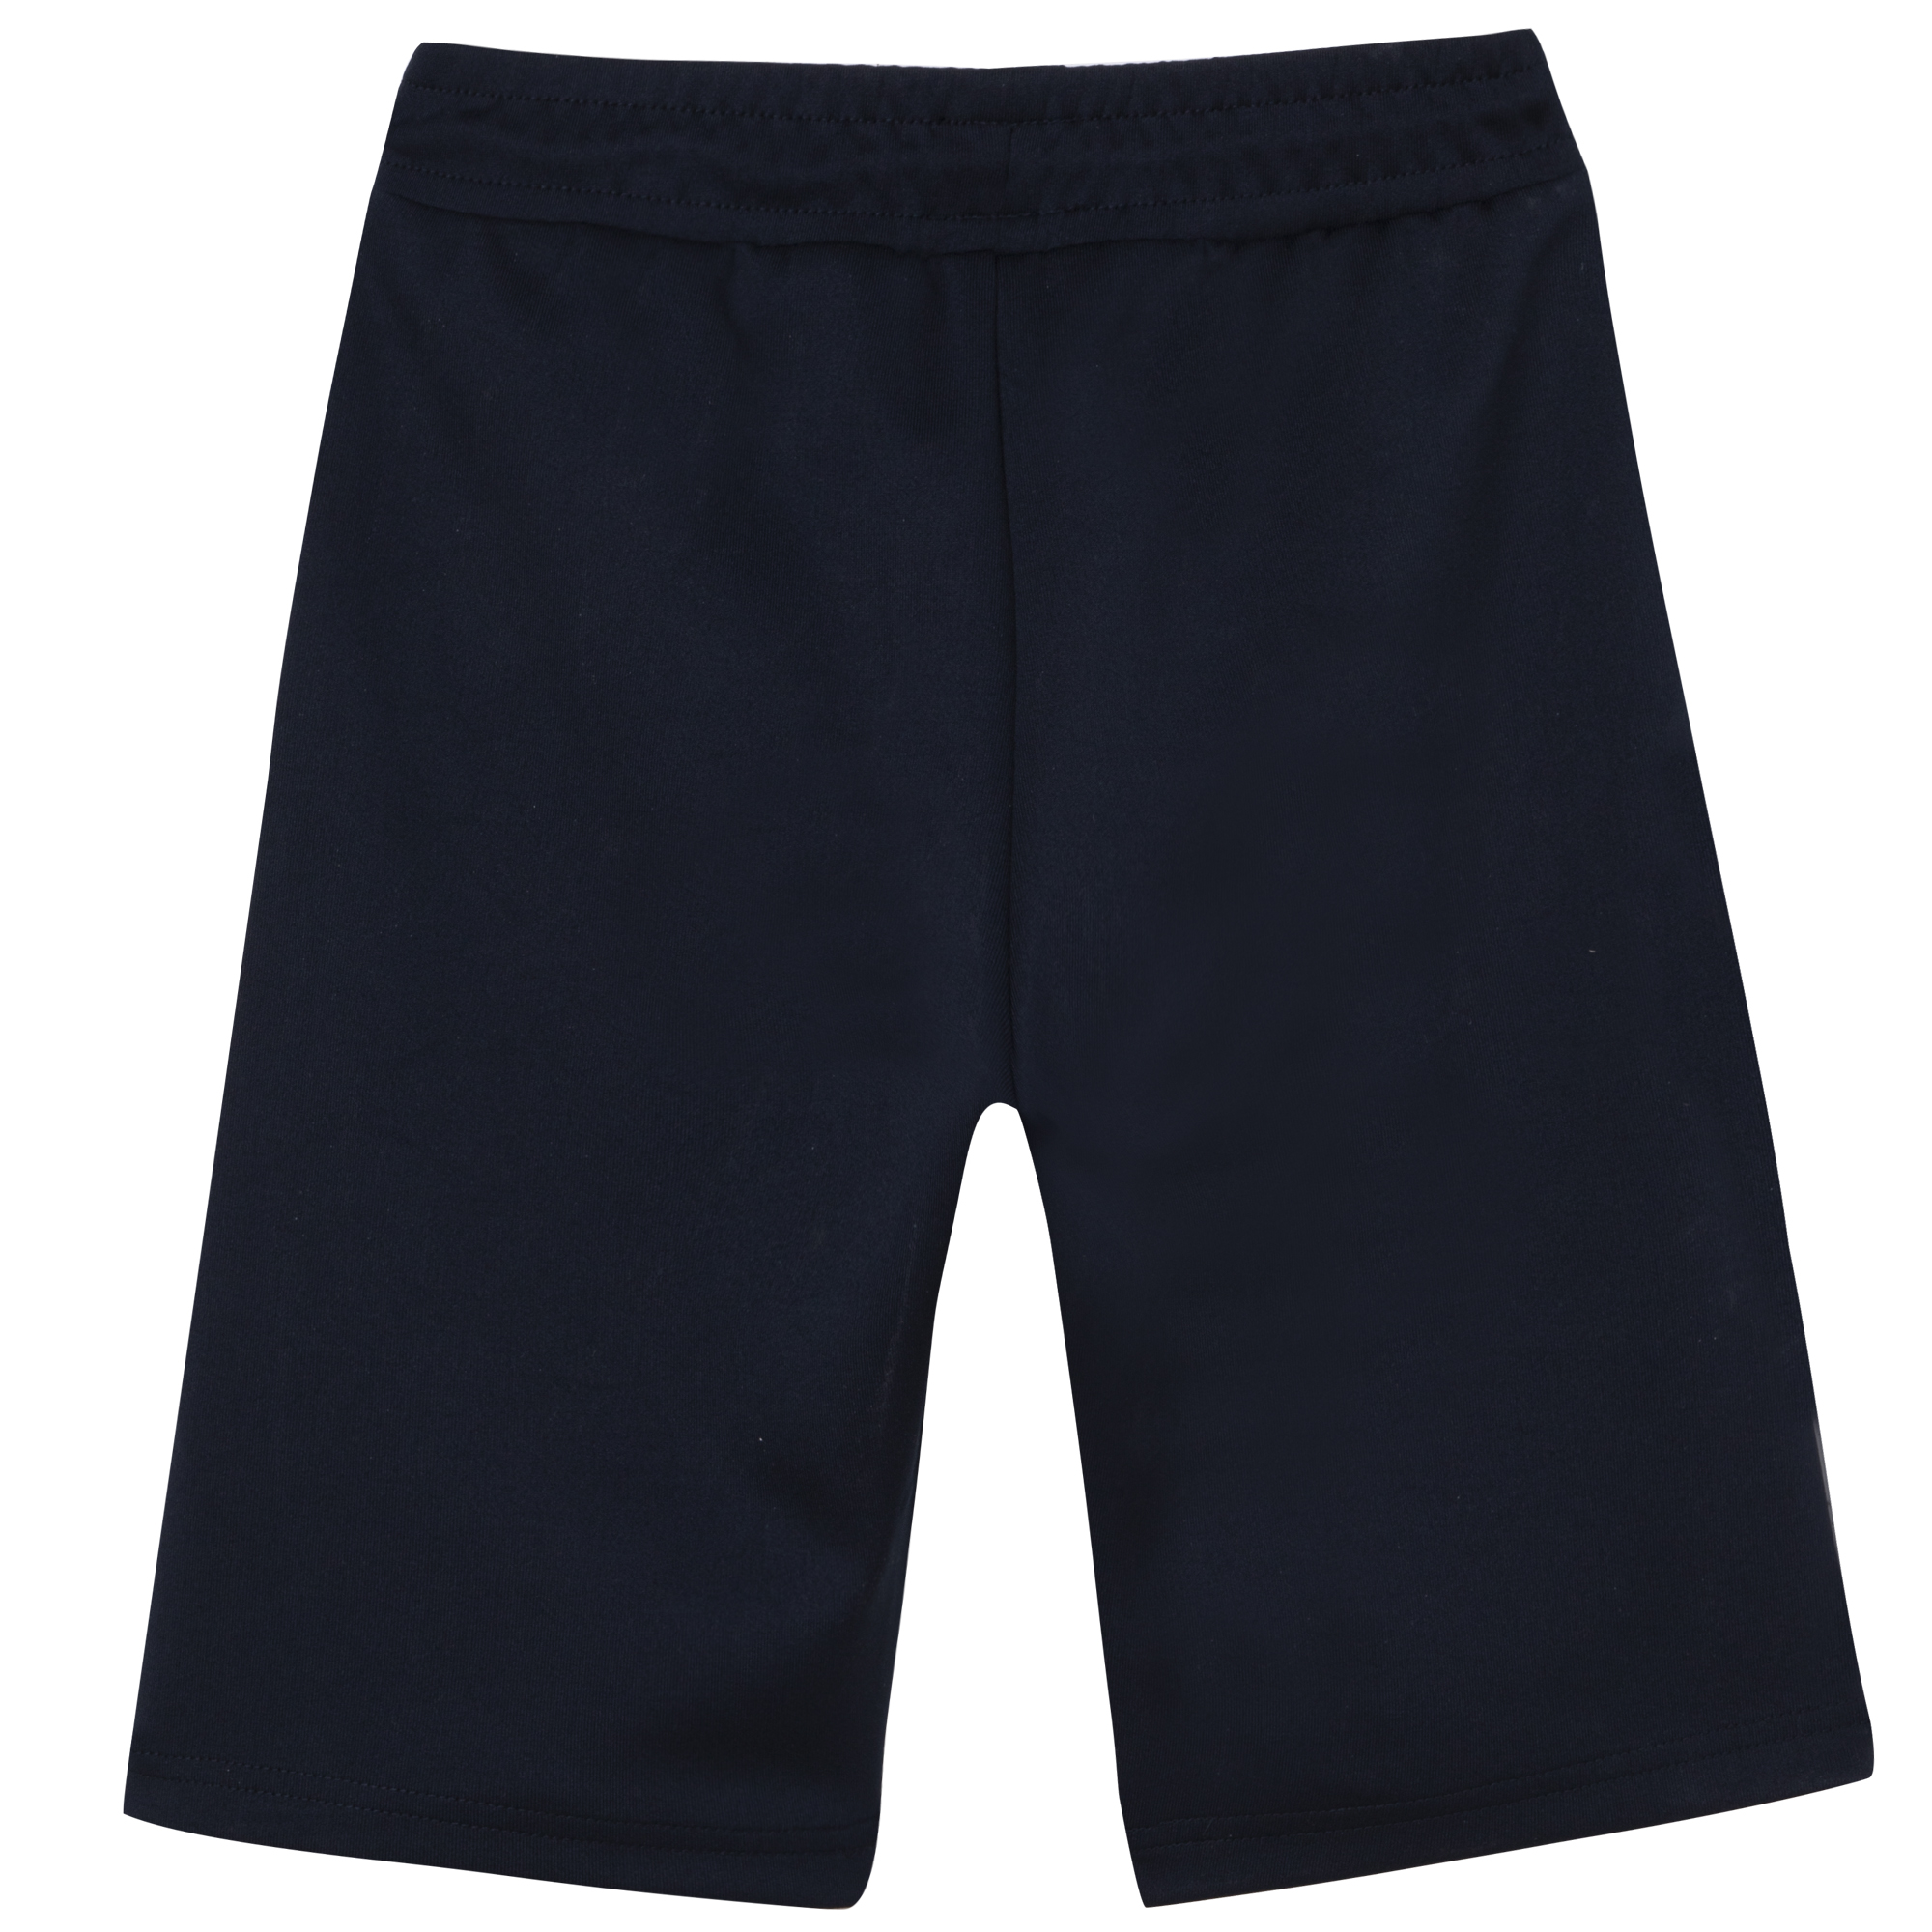 Bermuda shorts BOSS for BOY